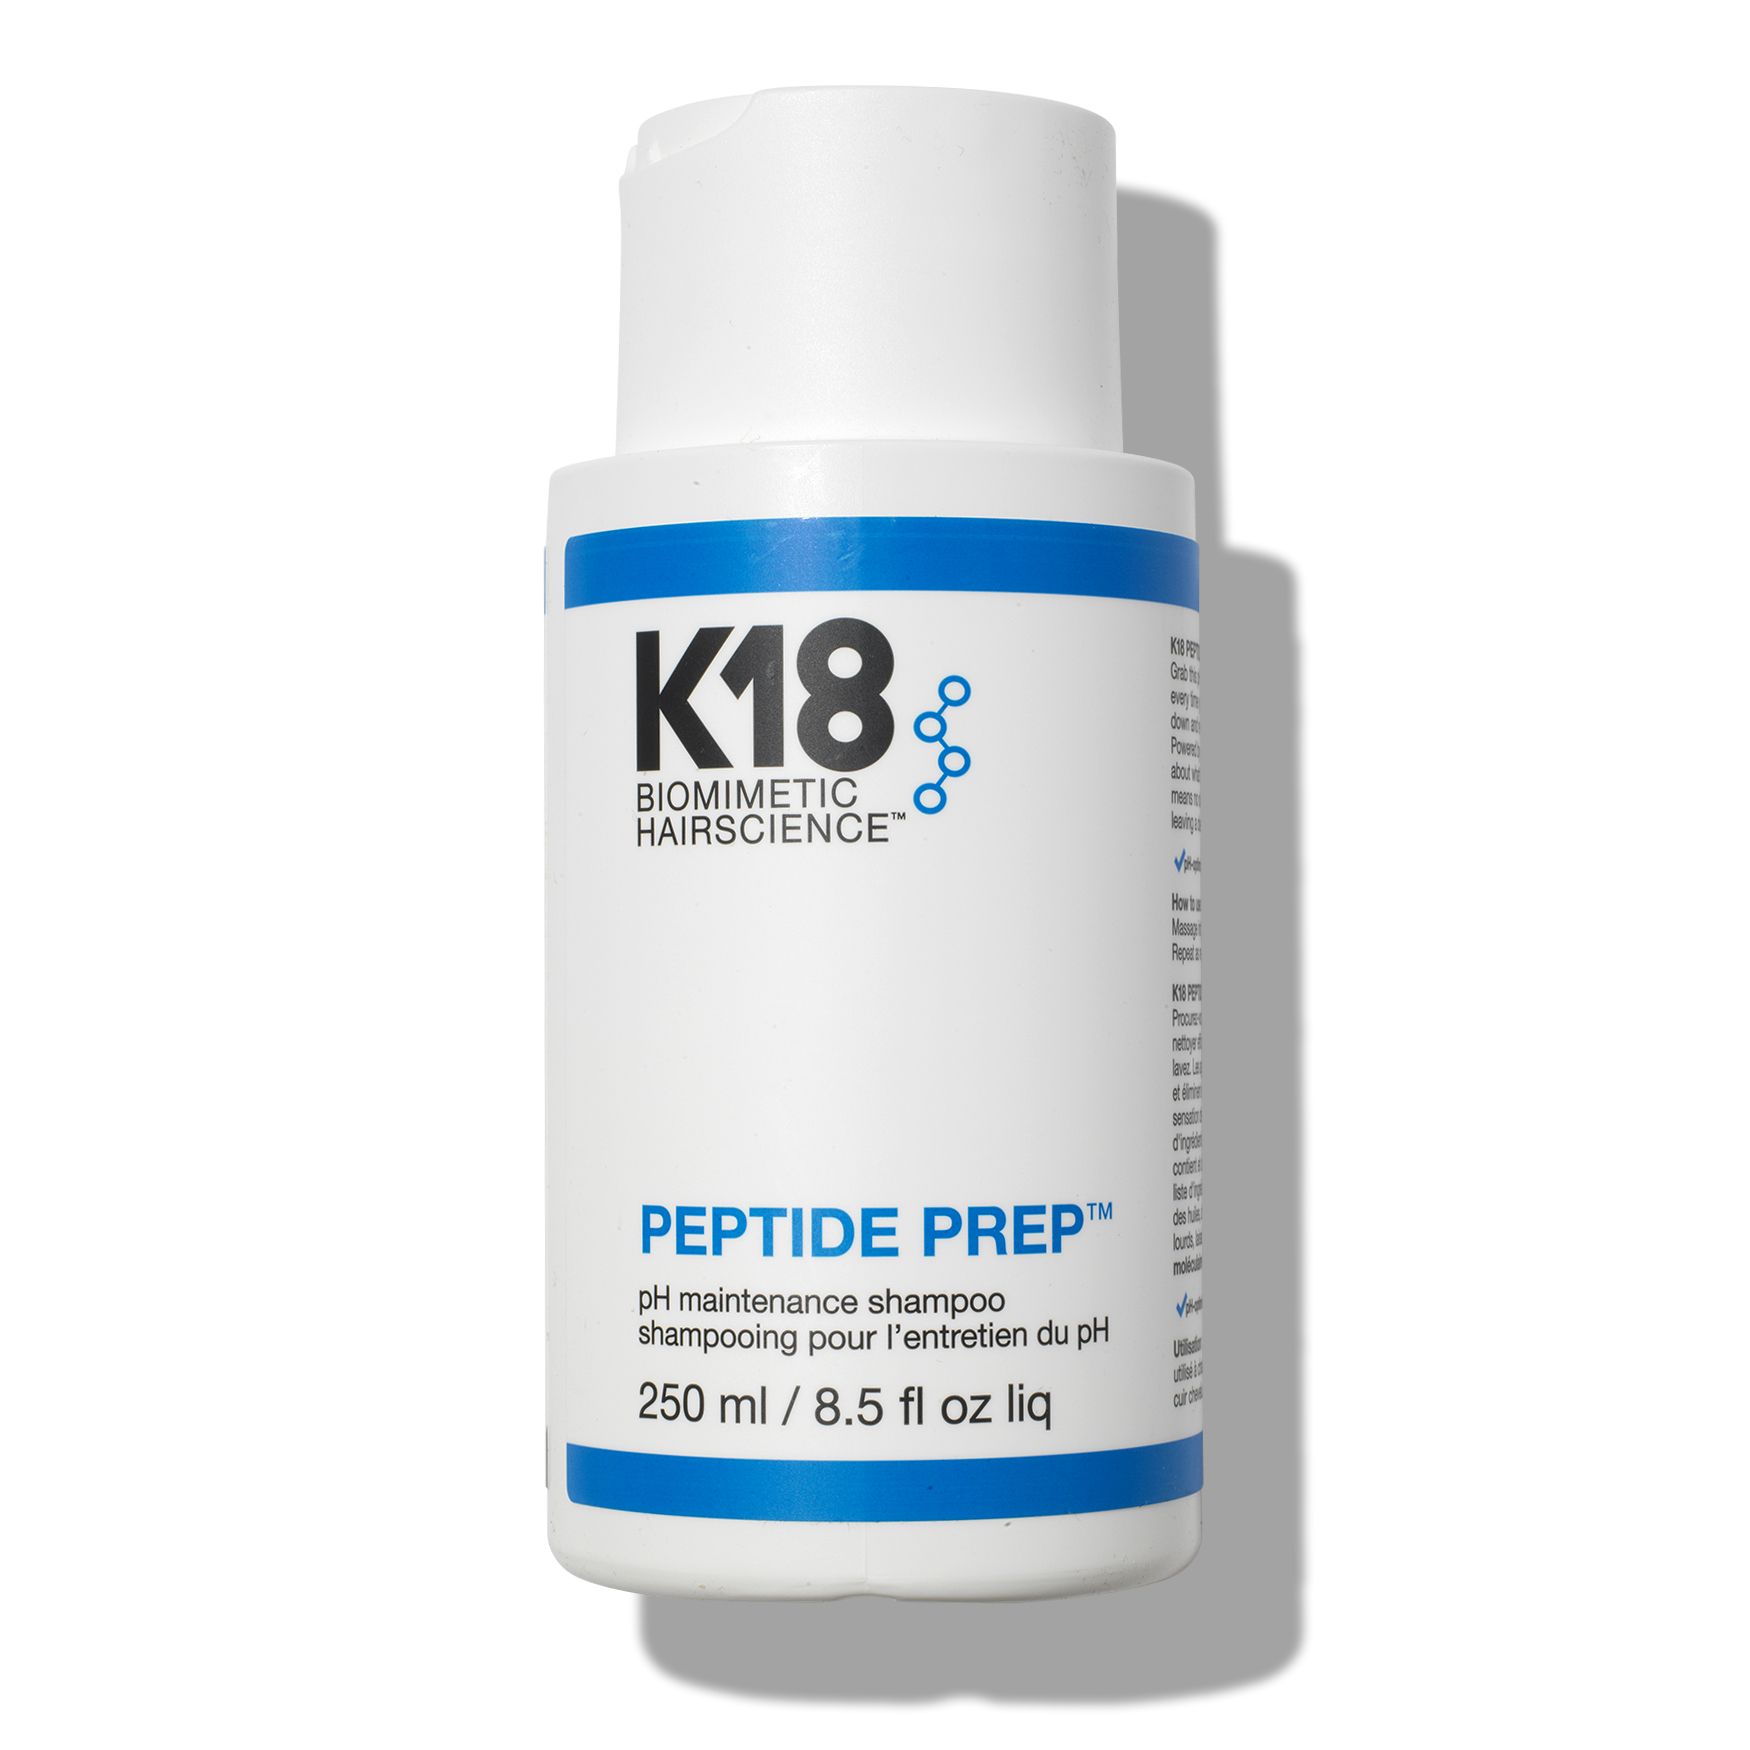 PEPTIDE PREP™ pH maintenance shampoo | Space NK - UK